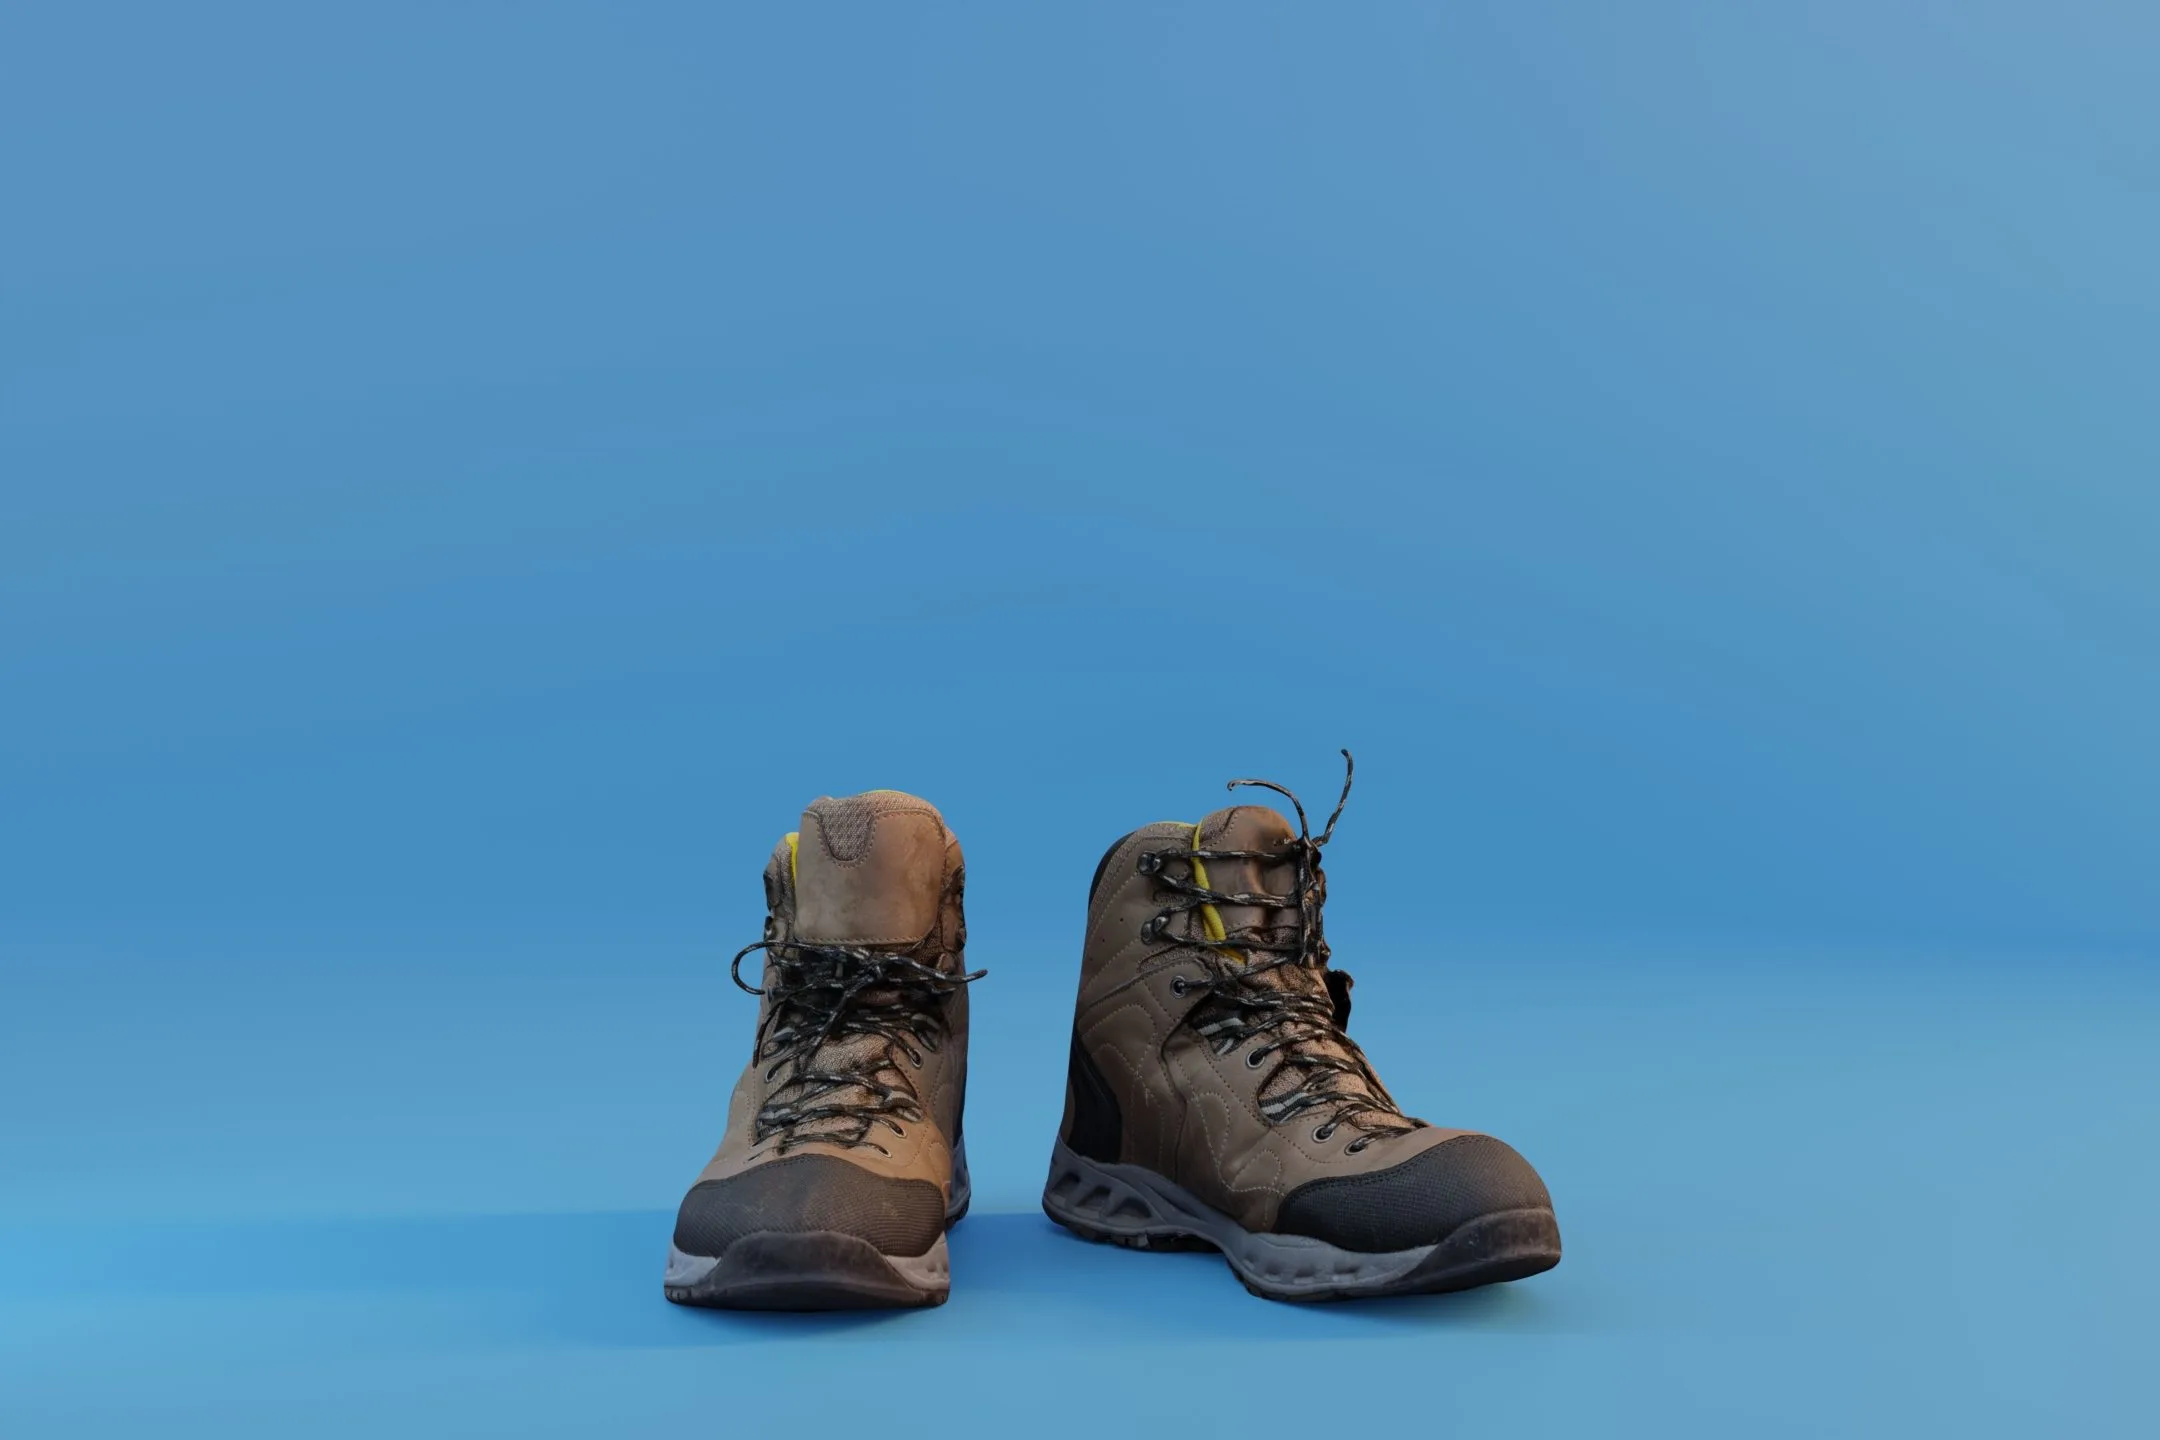 Photorealistic Hiking Boots